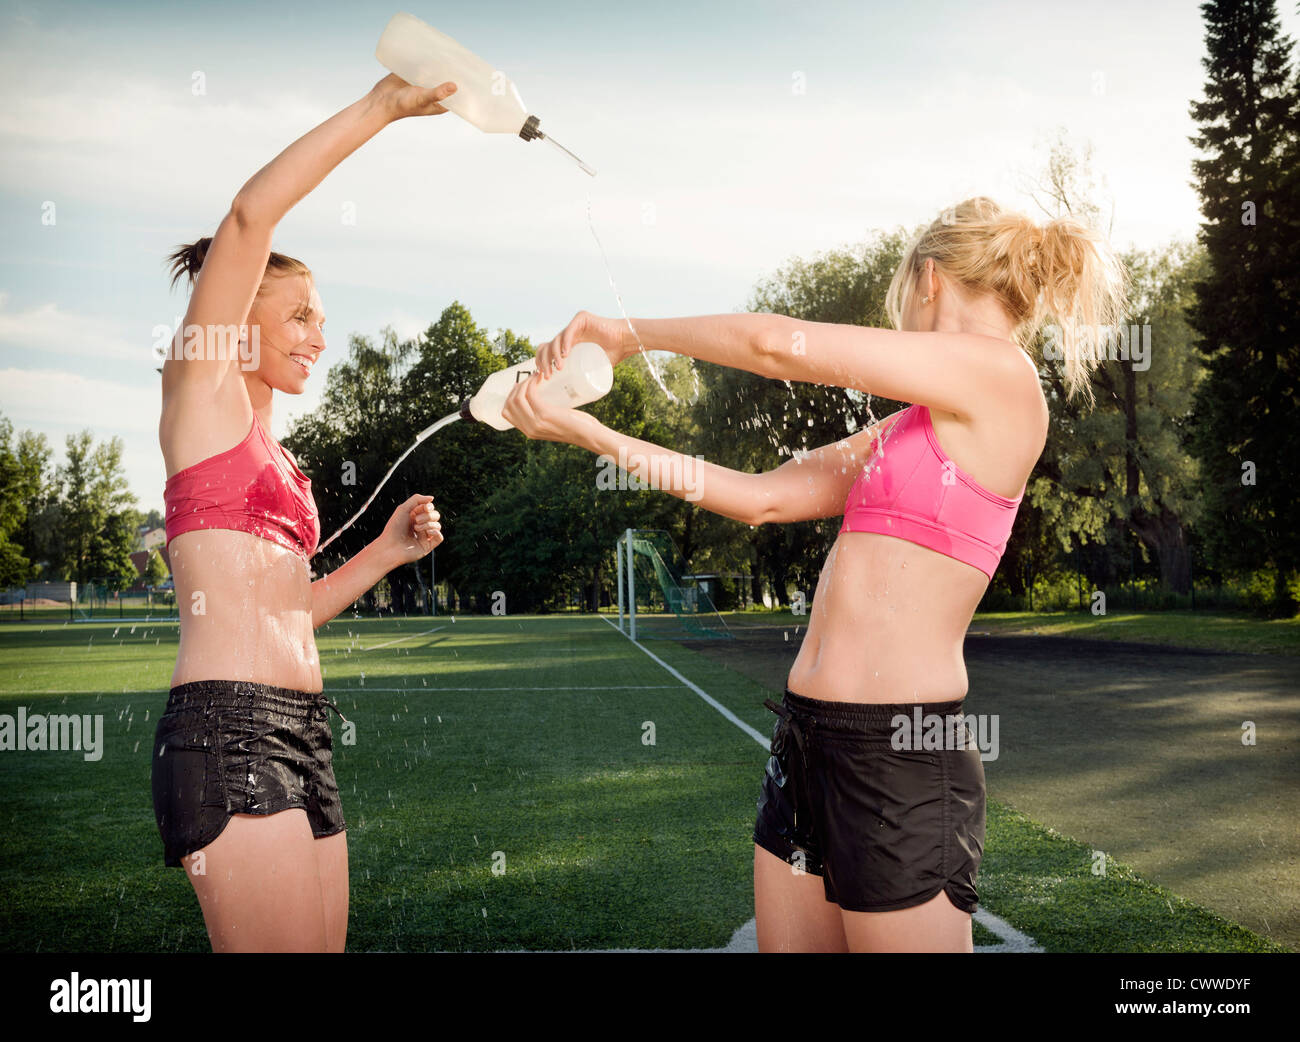 Runners splashing each other in park Stock Photo